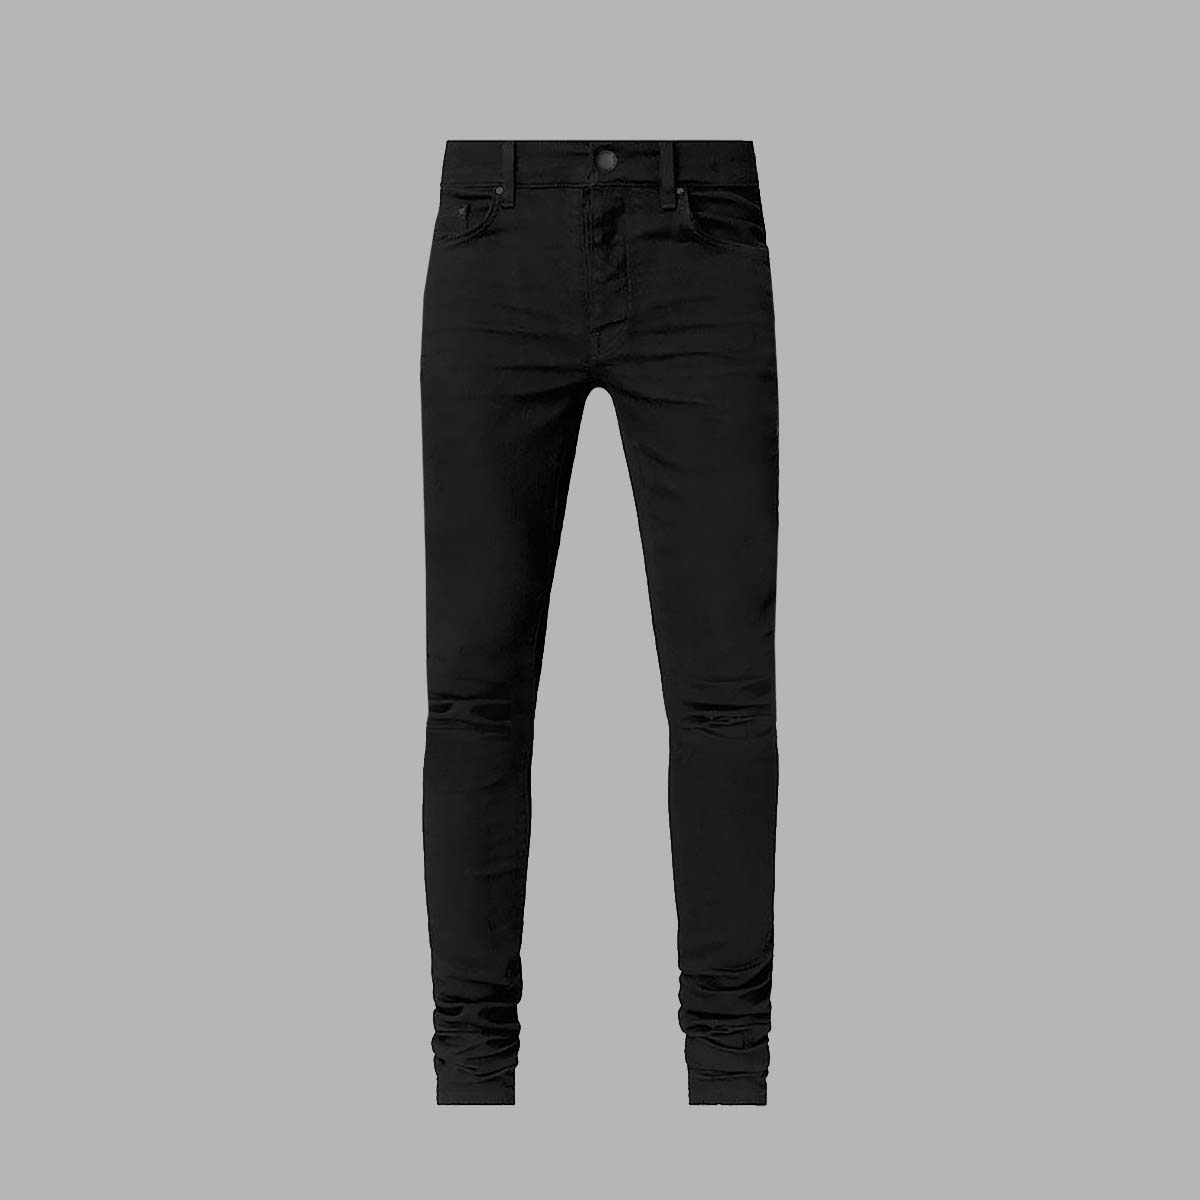 Black Jeans png images